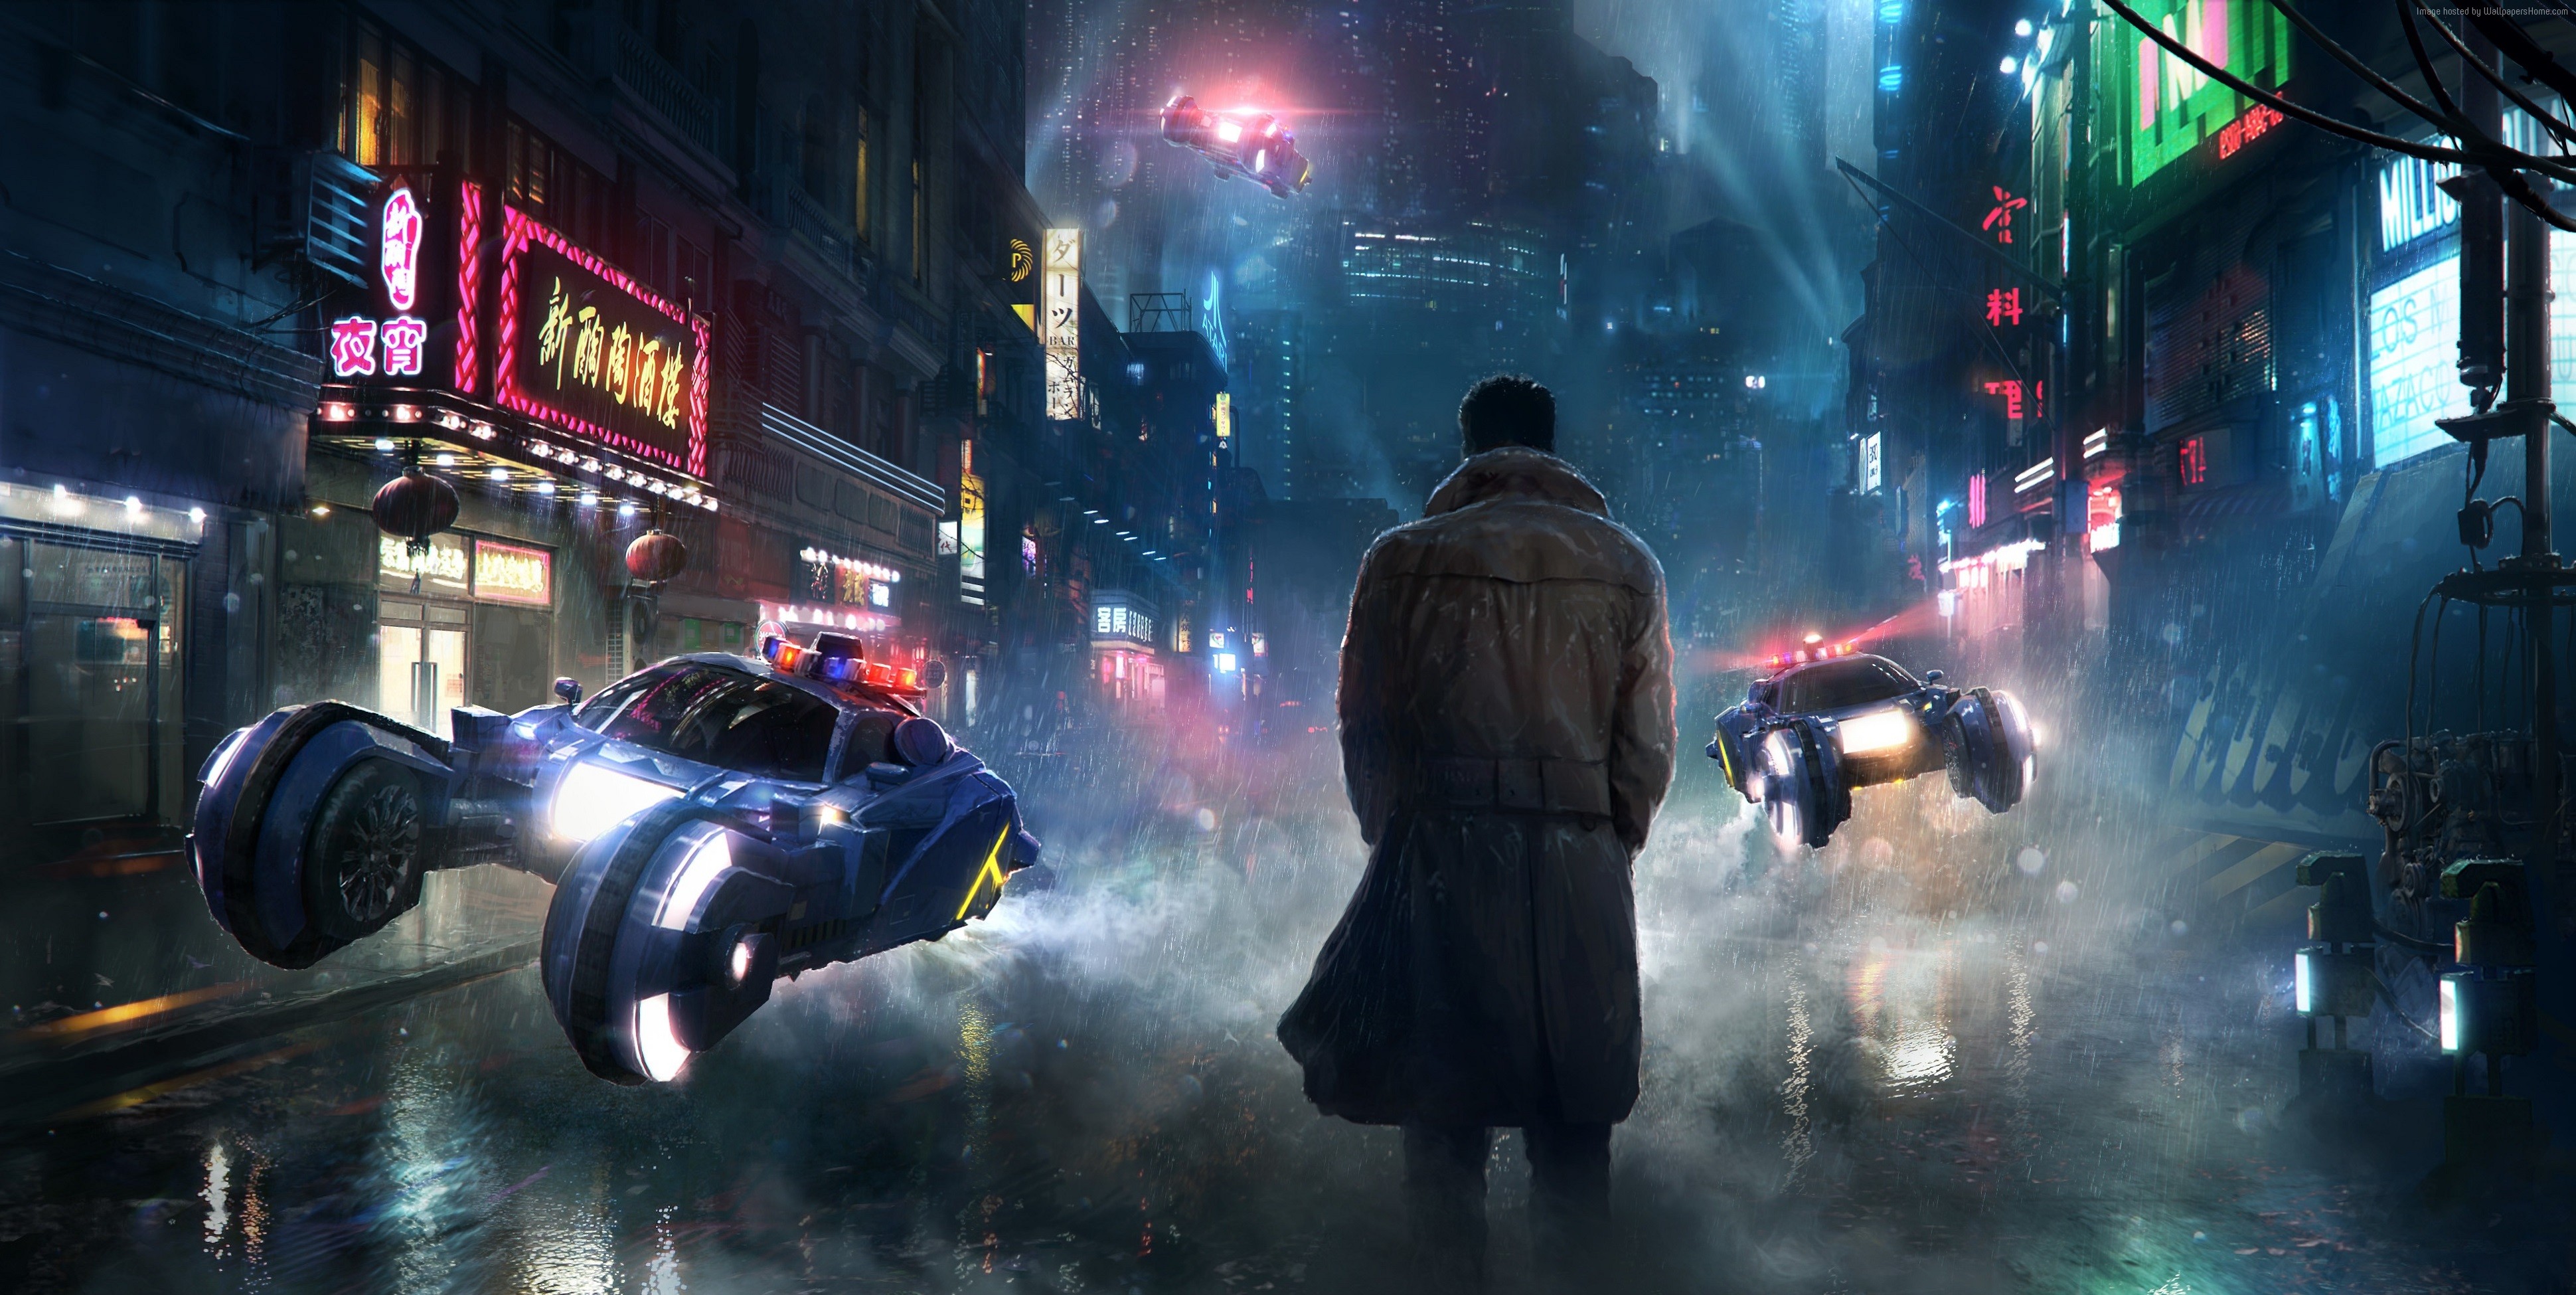 Phantastische Illustrationen  Blade Runner movie poster Kilian Eng